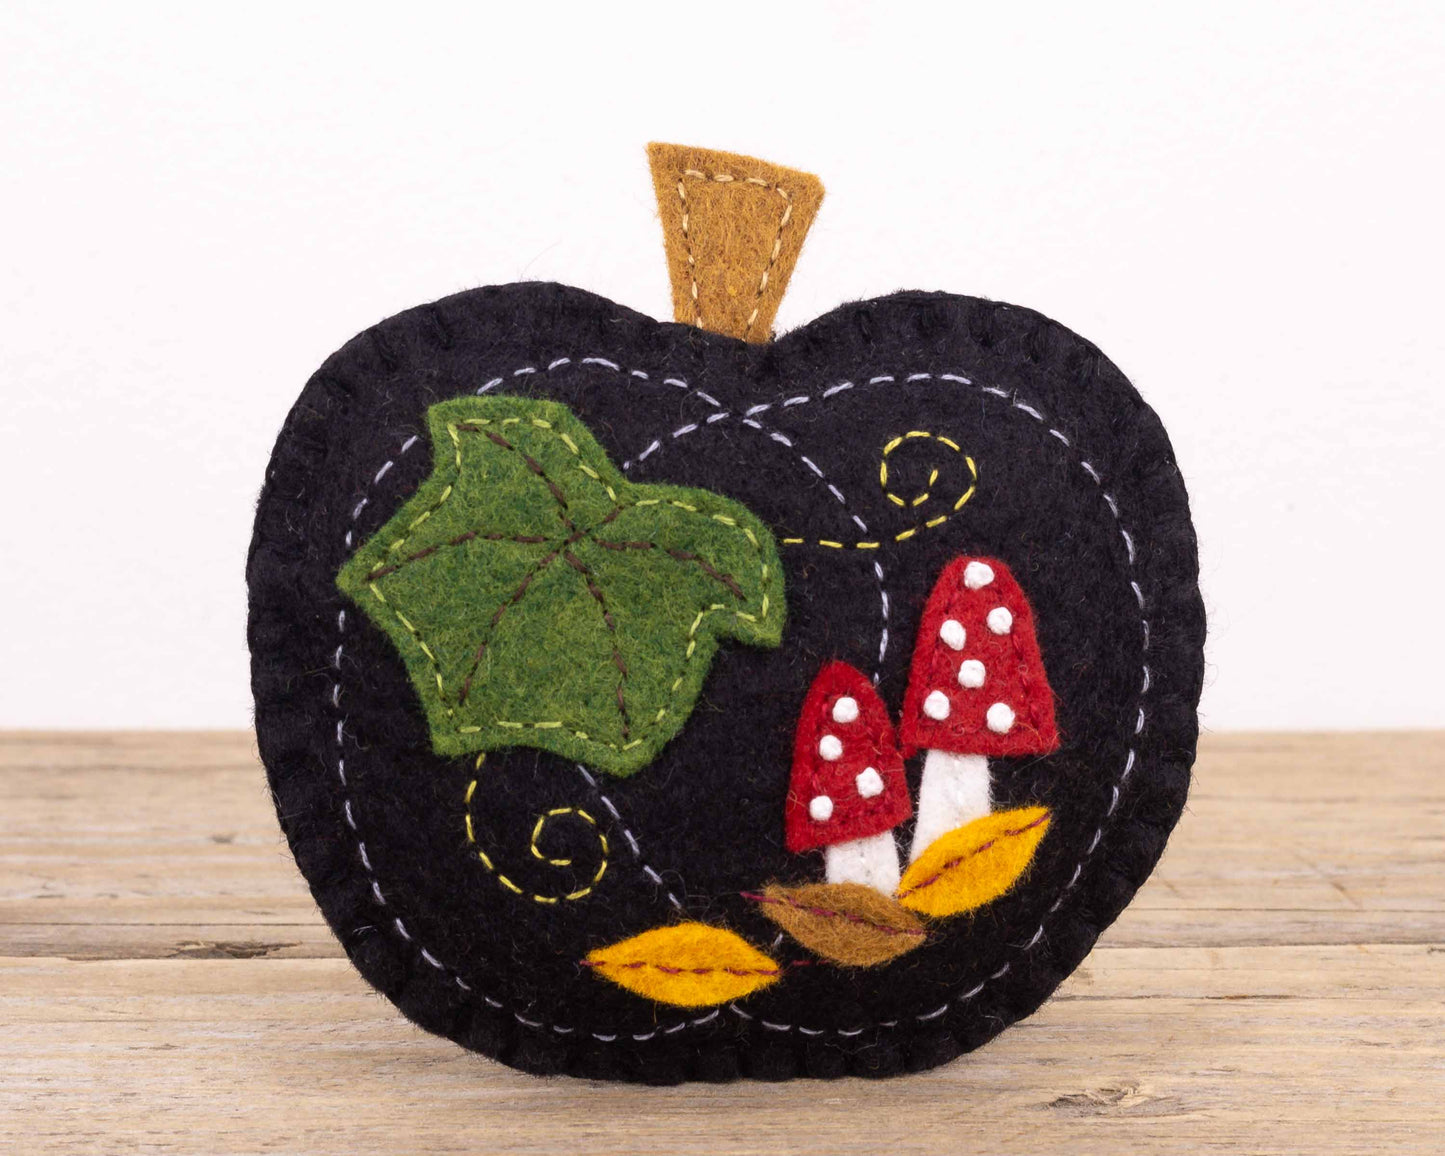 Pumpkin and Toadstool Felt Ornament in Black